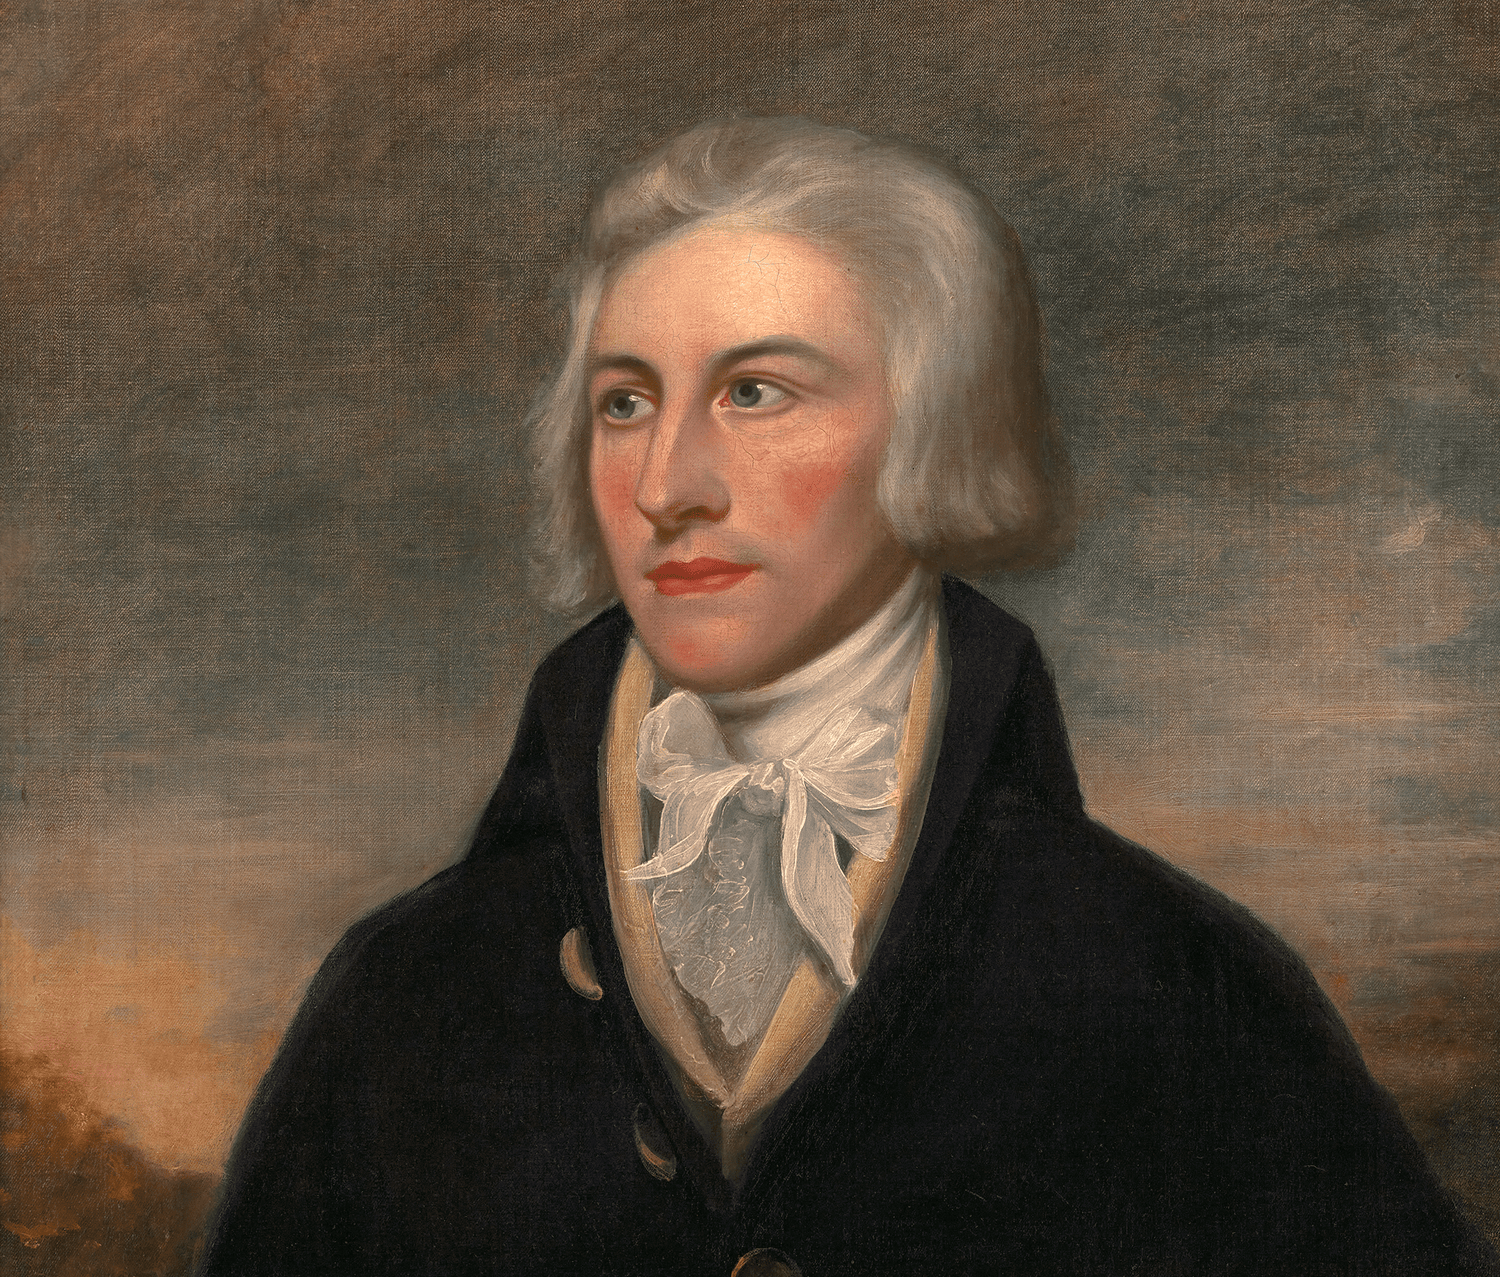 Portrait of Horatio Nelson attributed to Lemuel Abbott